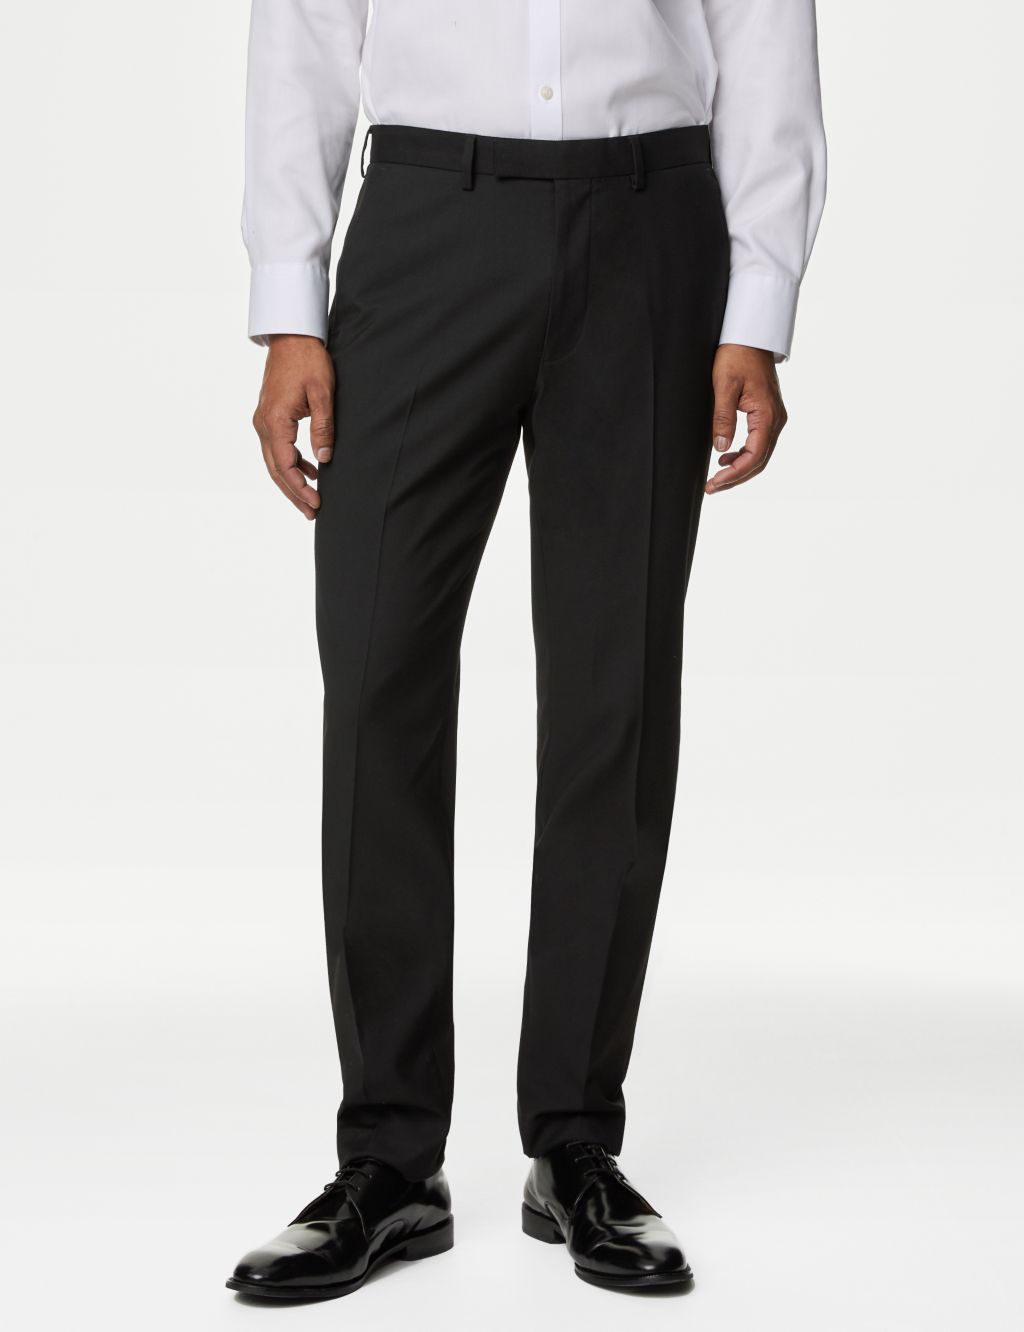 Men's Trousers, Formal & Suit Trousers